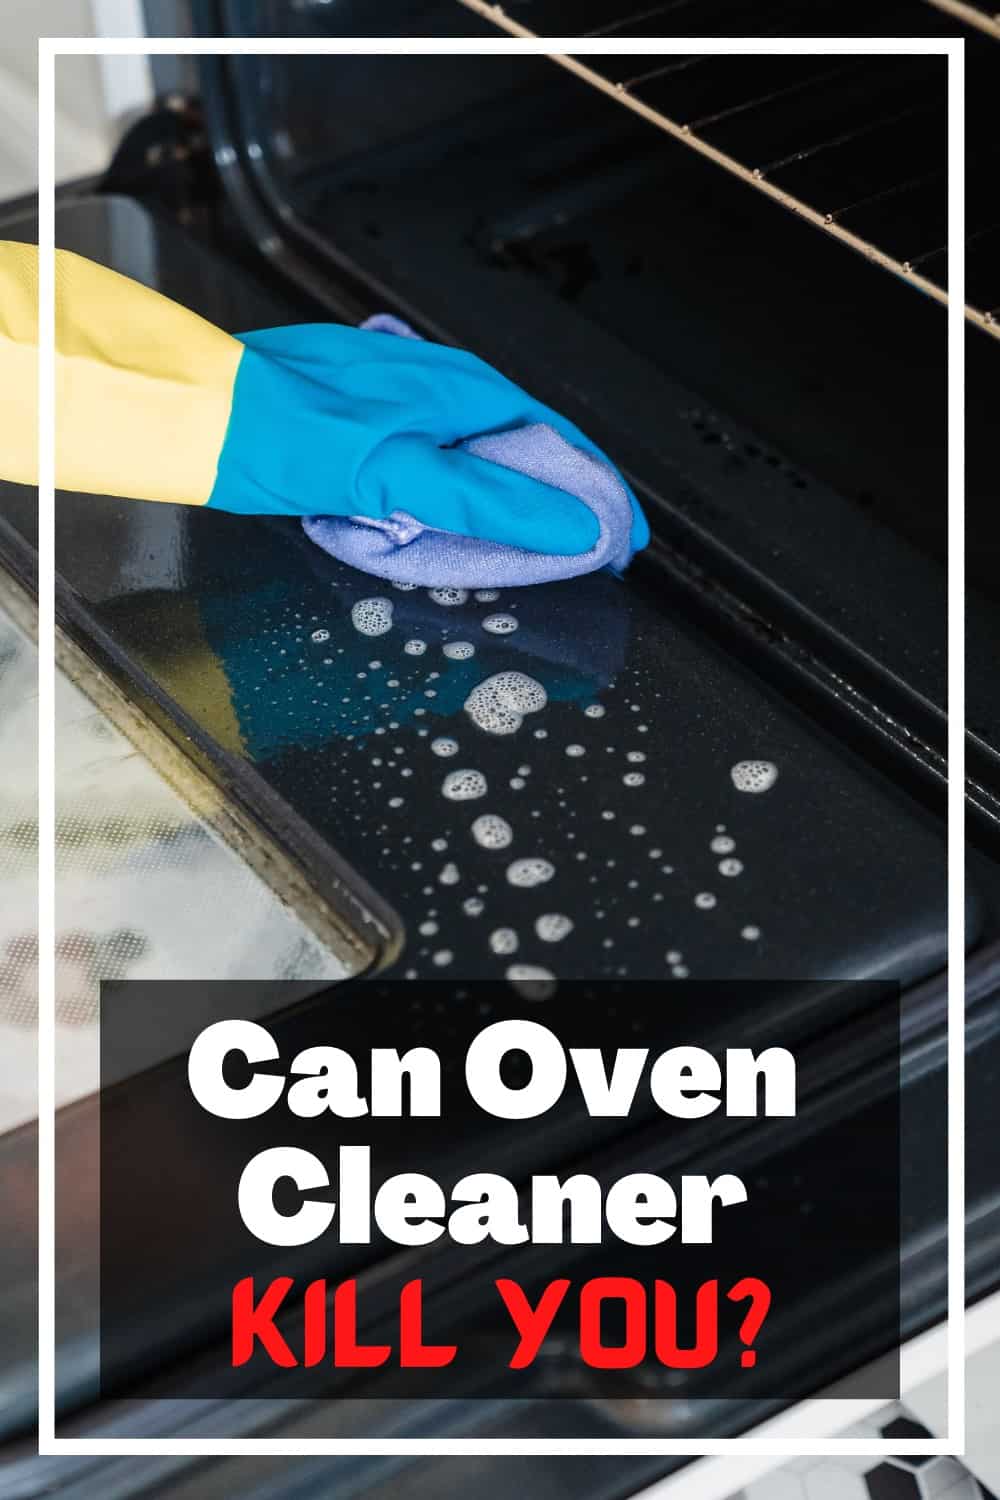 How Dangerous Is Oven Cleaner?